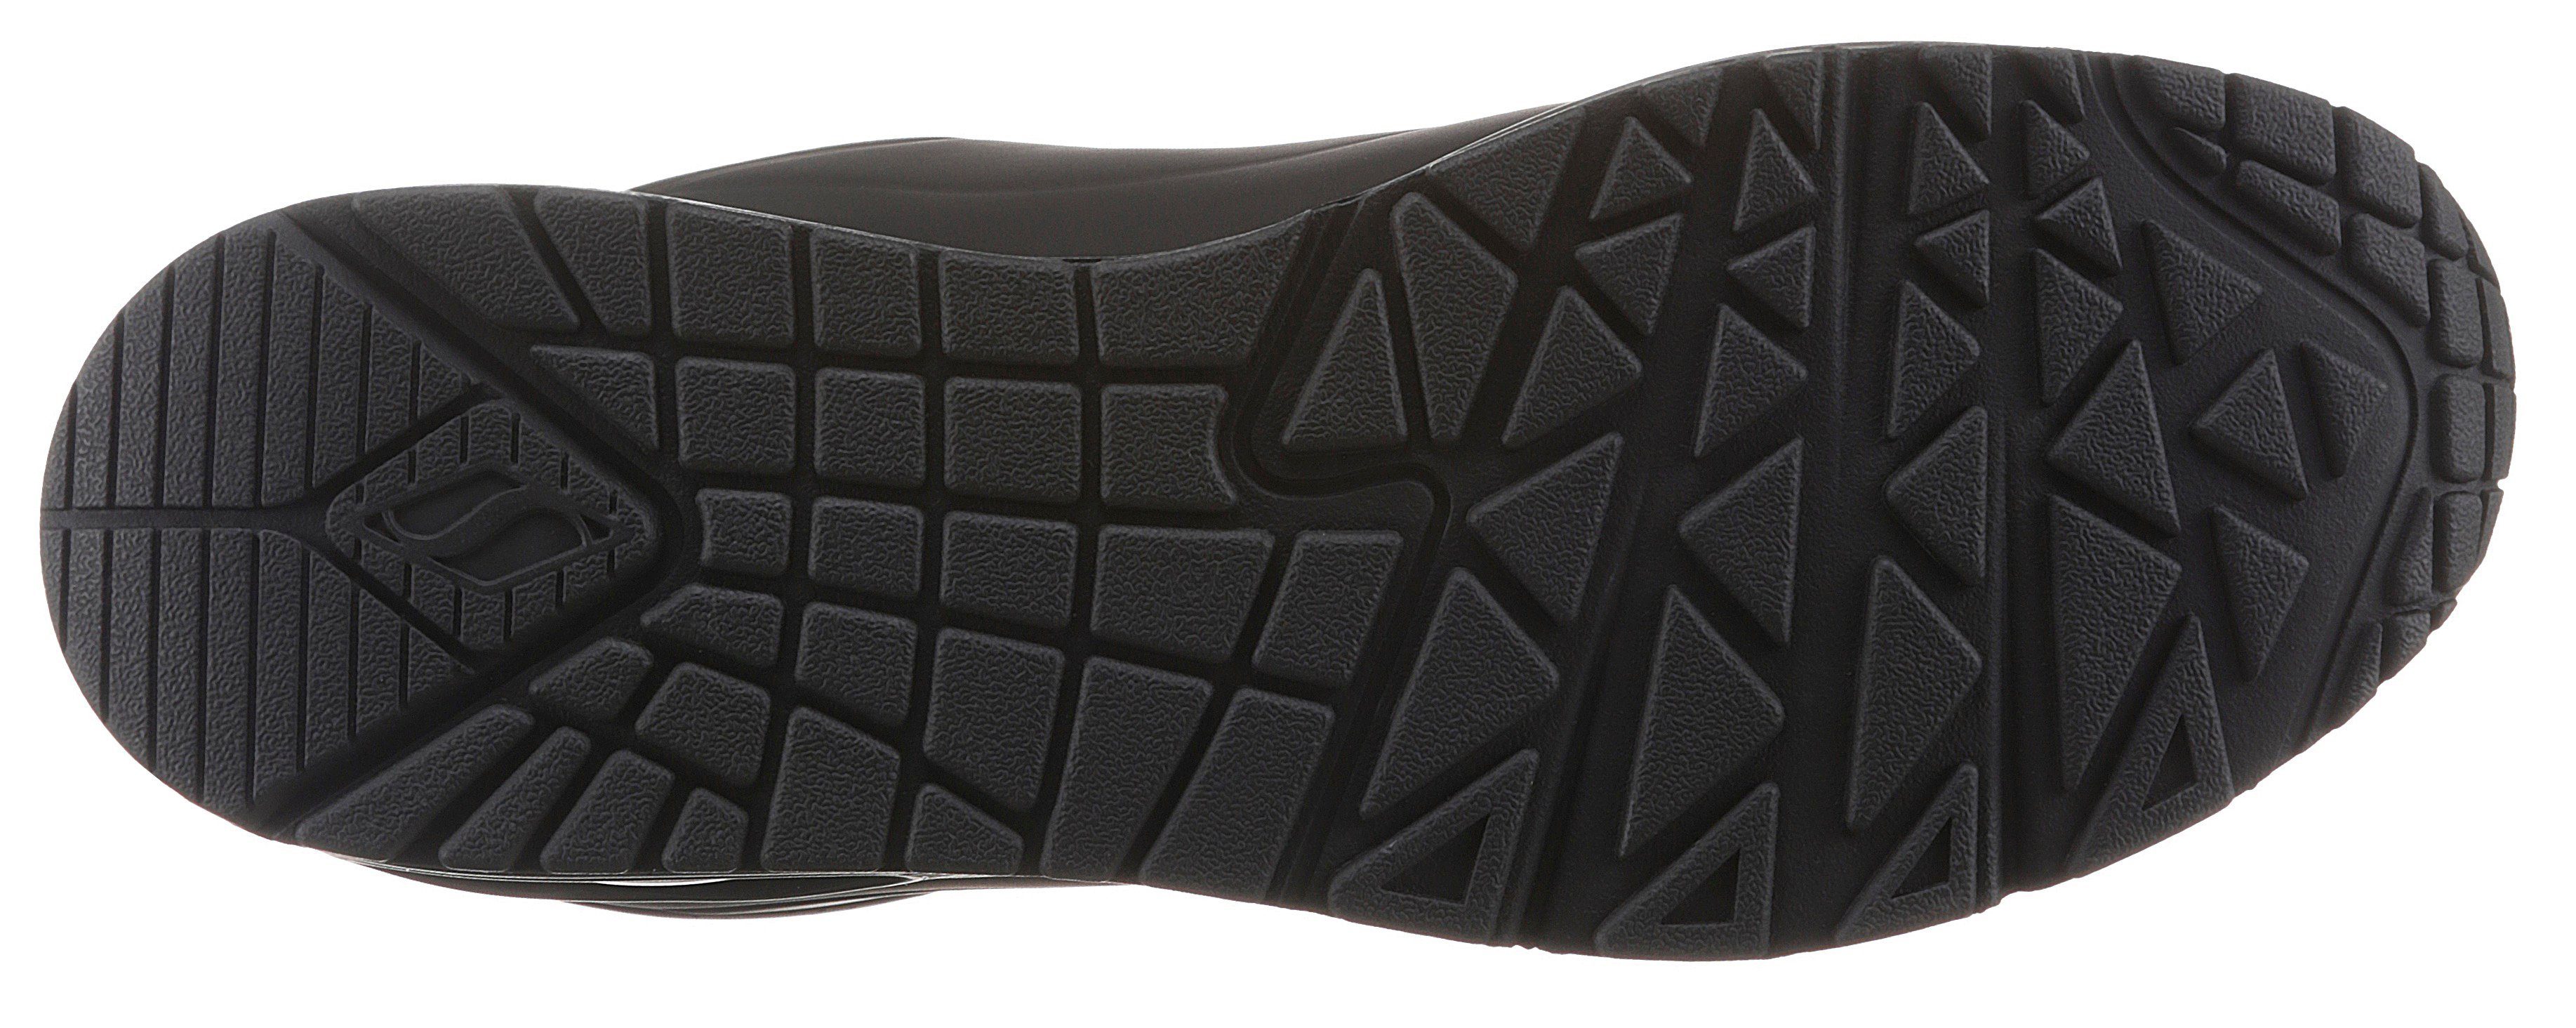 Wedgesneaker on Uno black Stand feiner Skechers Perforation mit Air -